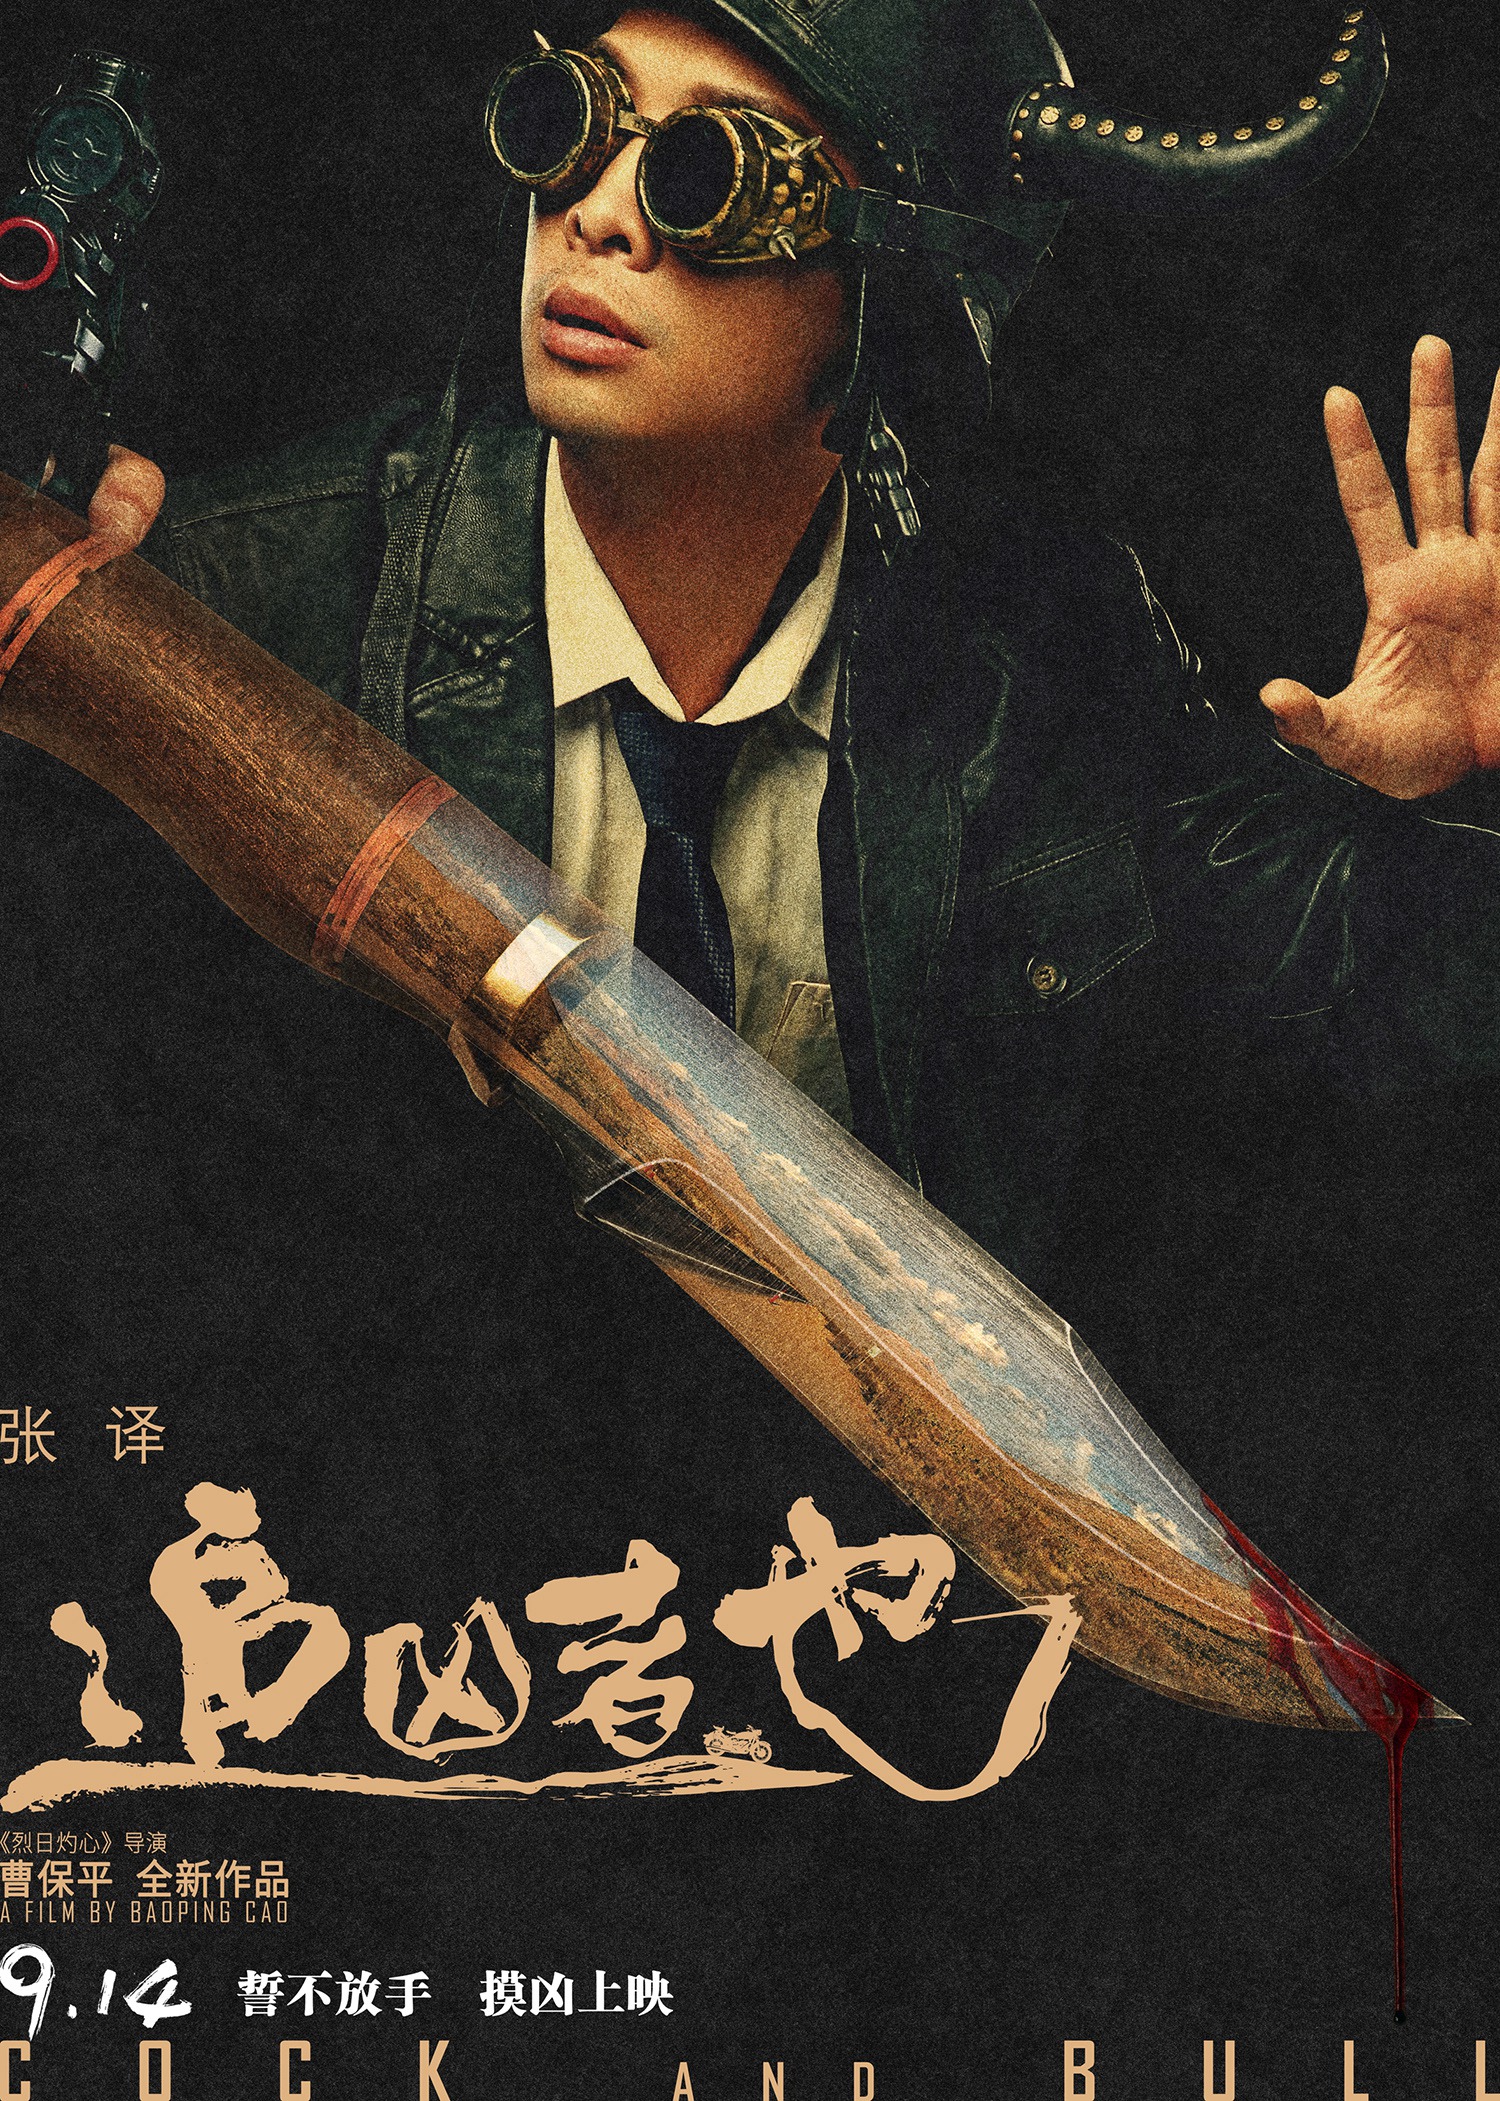 Mega Sized Movie Poster Image for Zhui xiong zhe ye (#10 of 16)